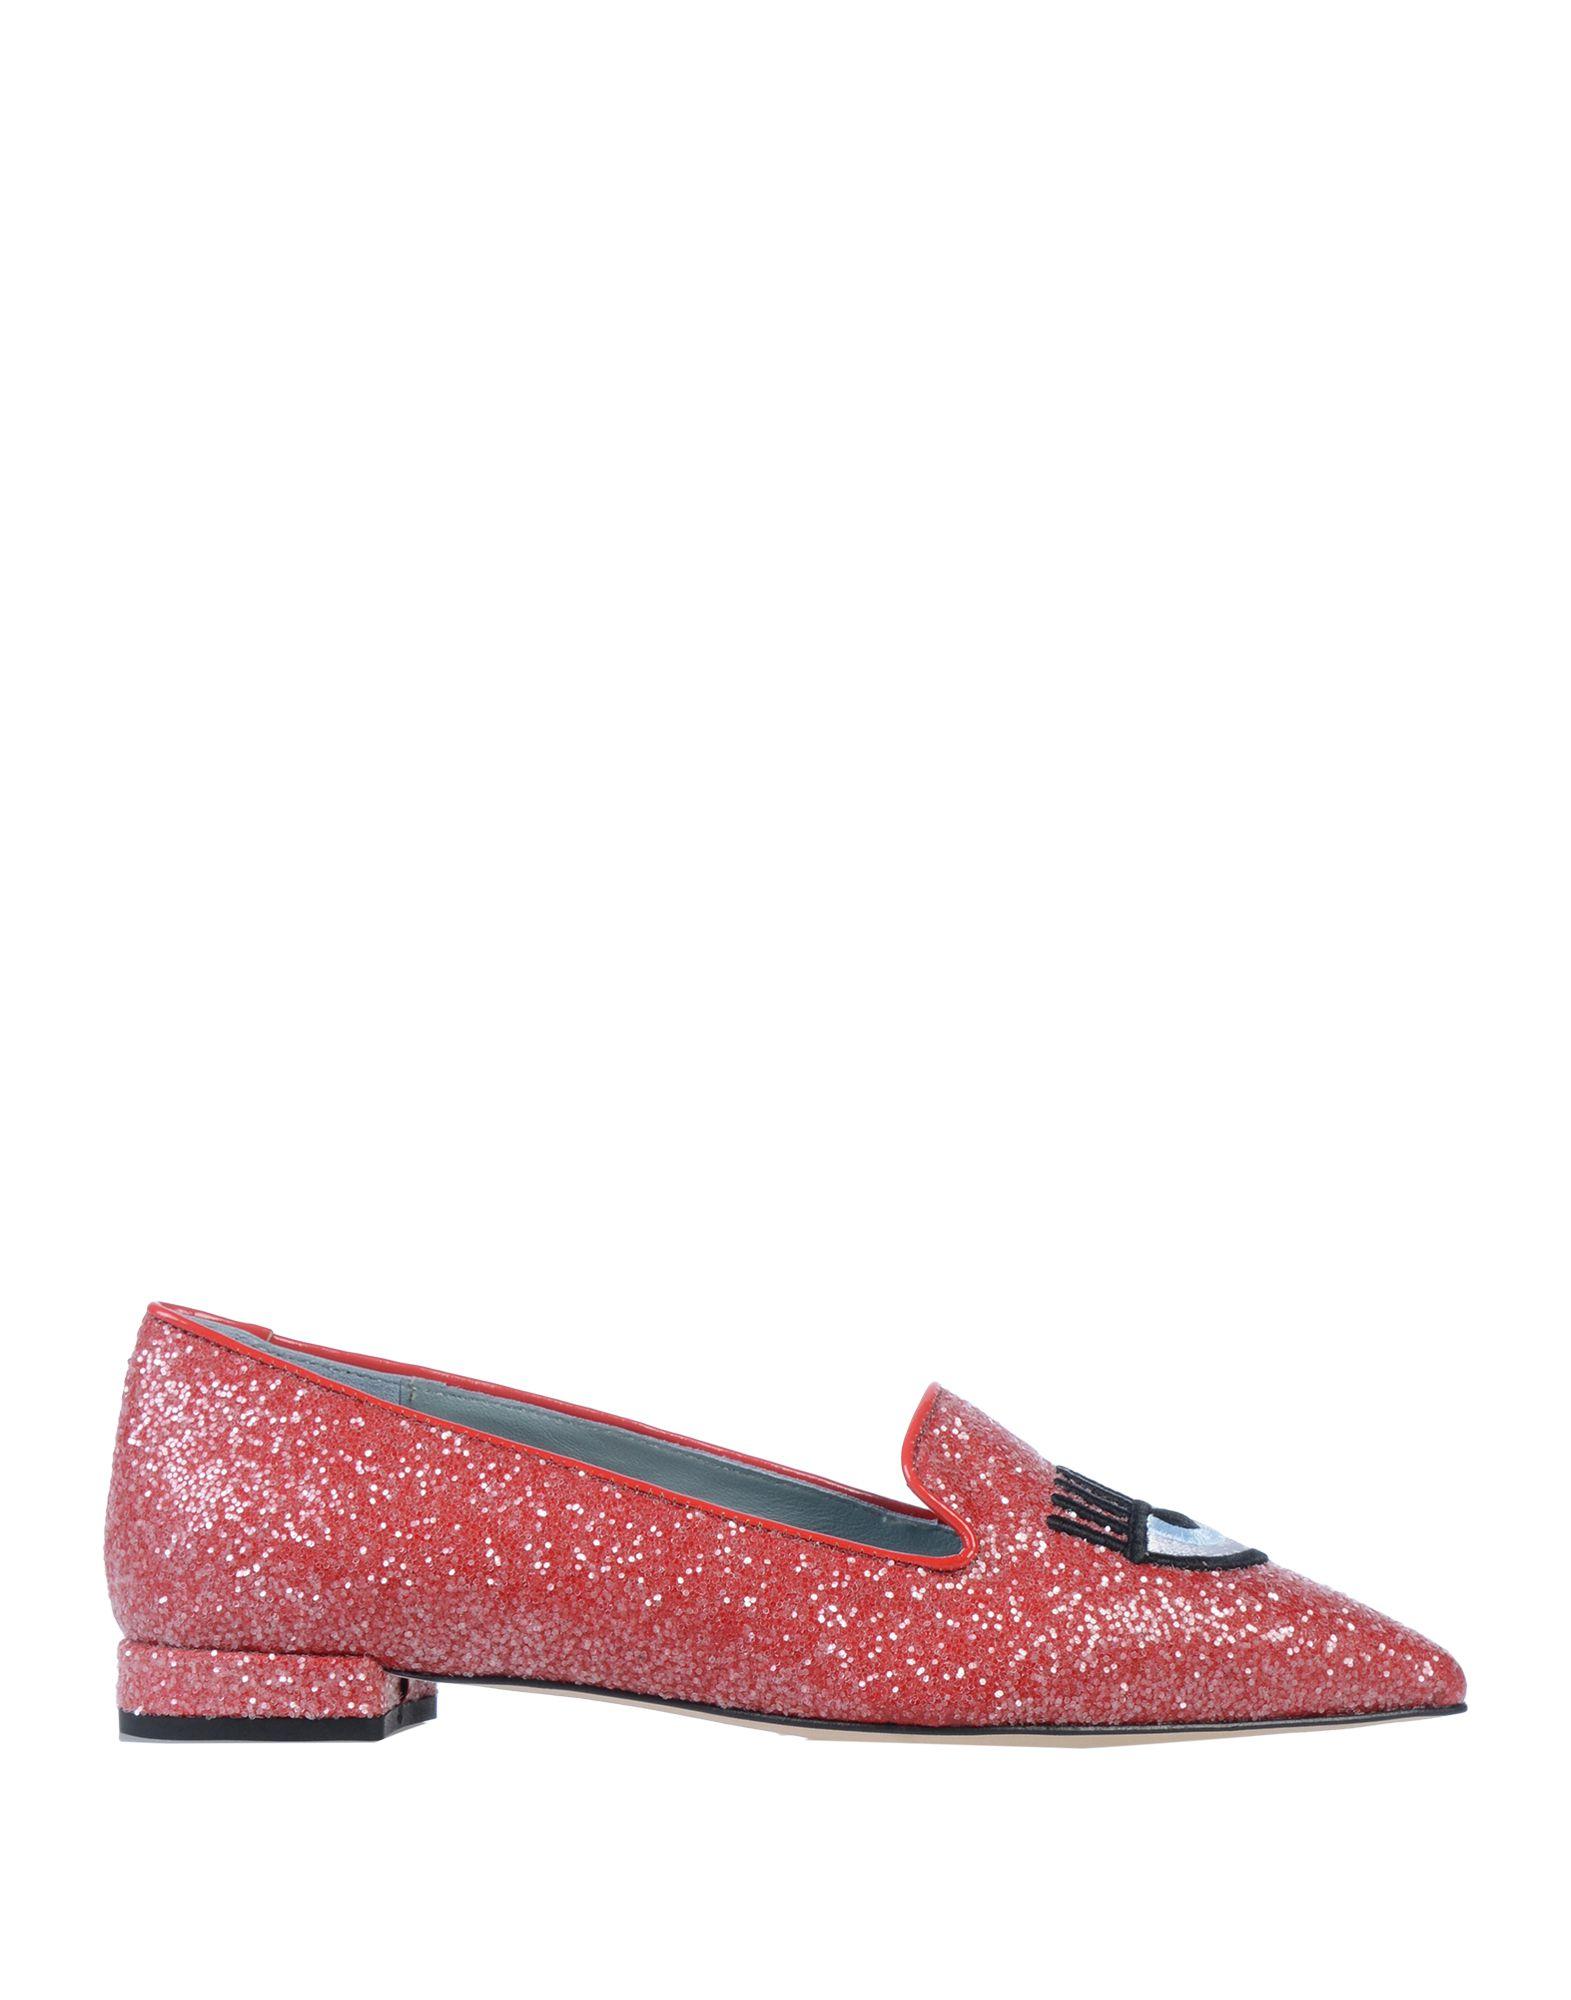 Chiara Ferragni Leather Loafer in Red - Lyst